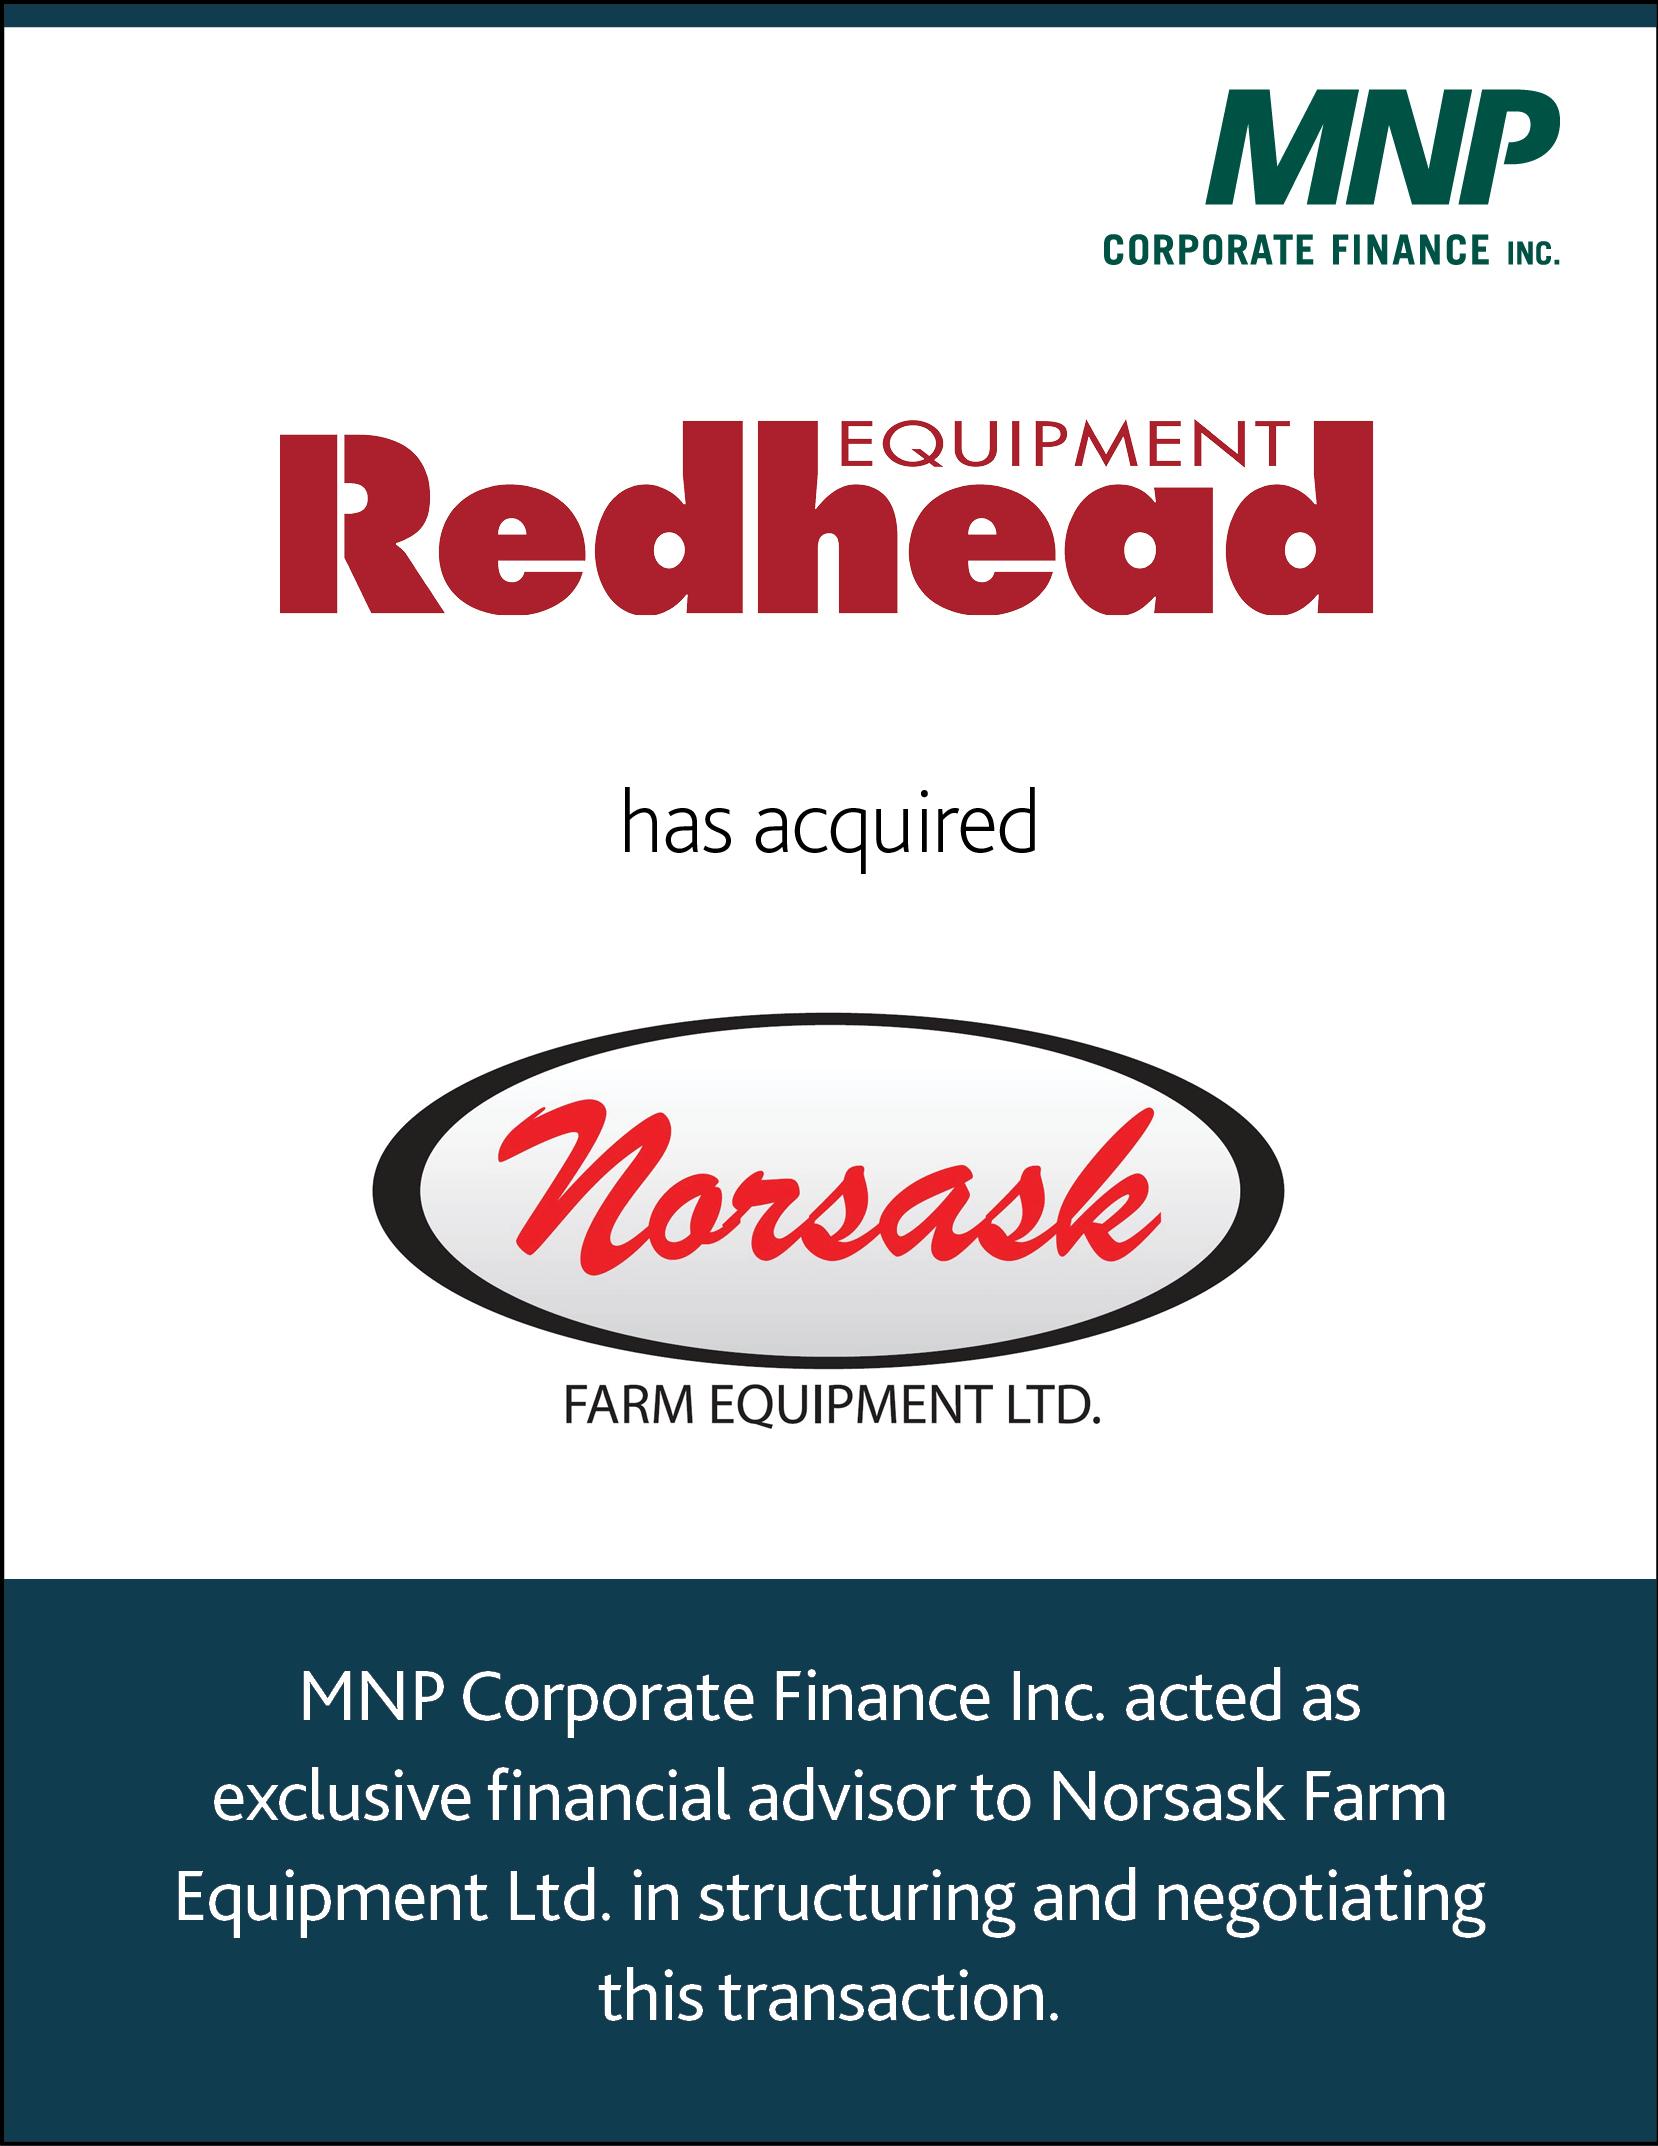 Redhead Equipment has acquired Norsask Farm Equipment Ltd.